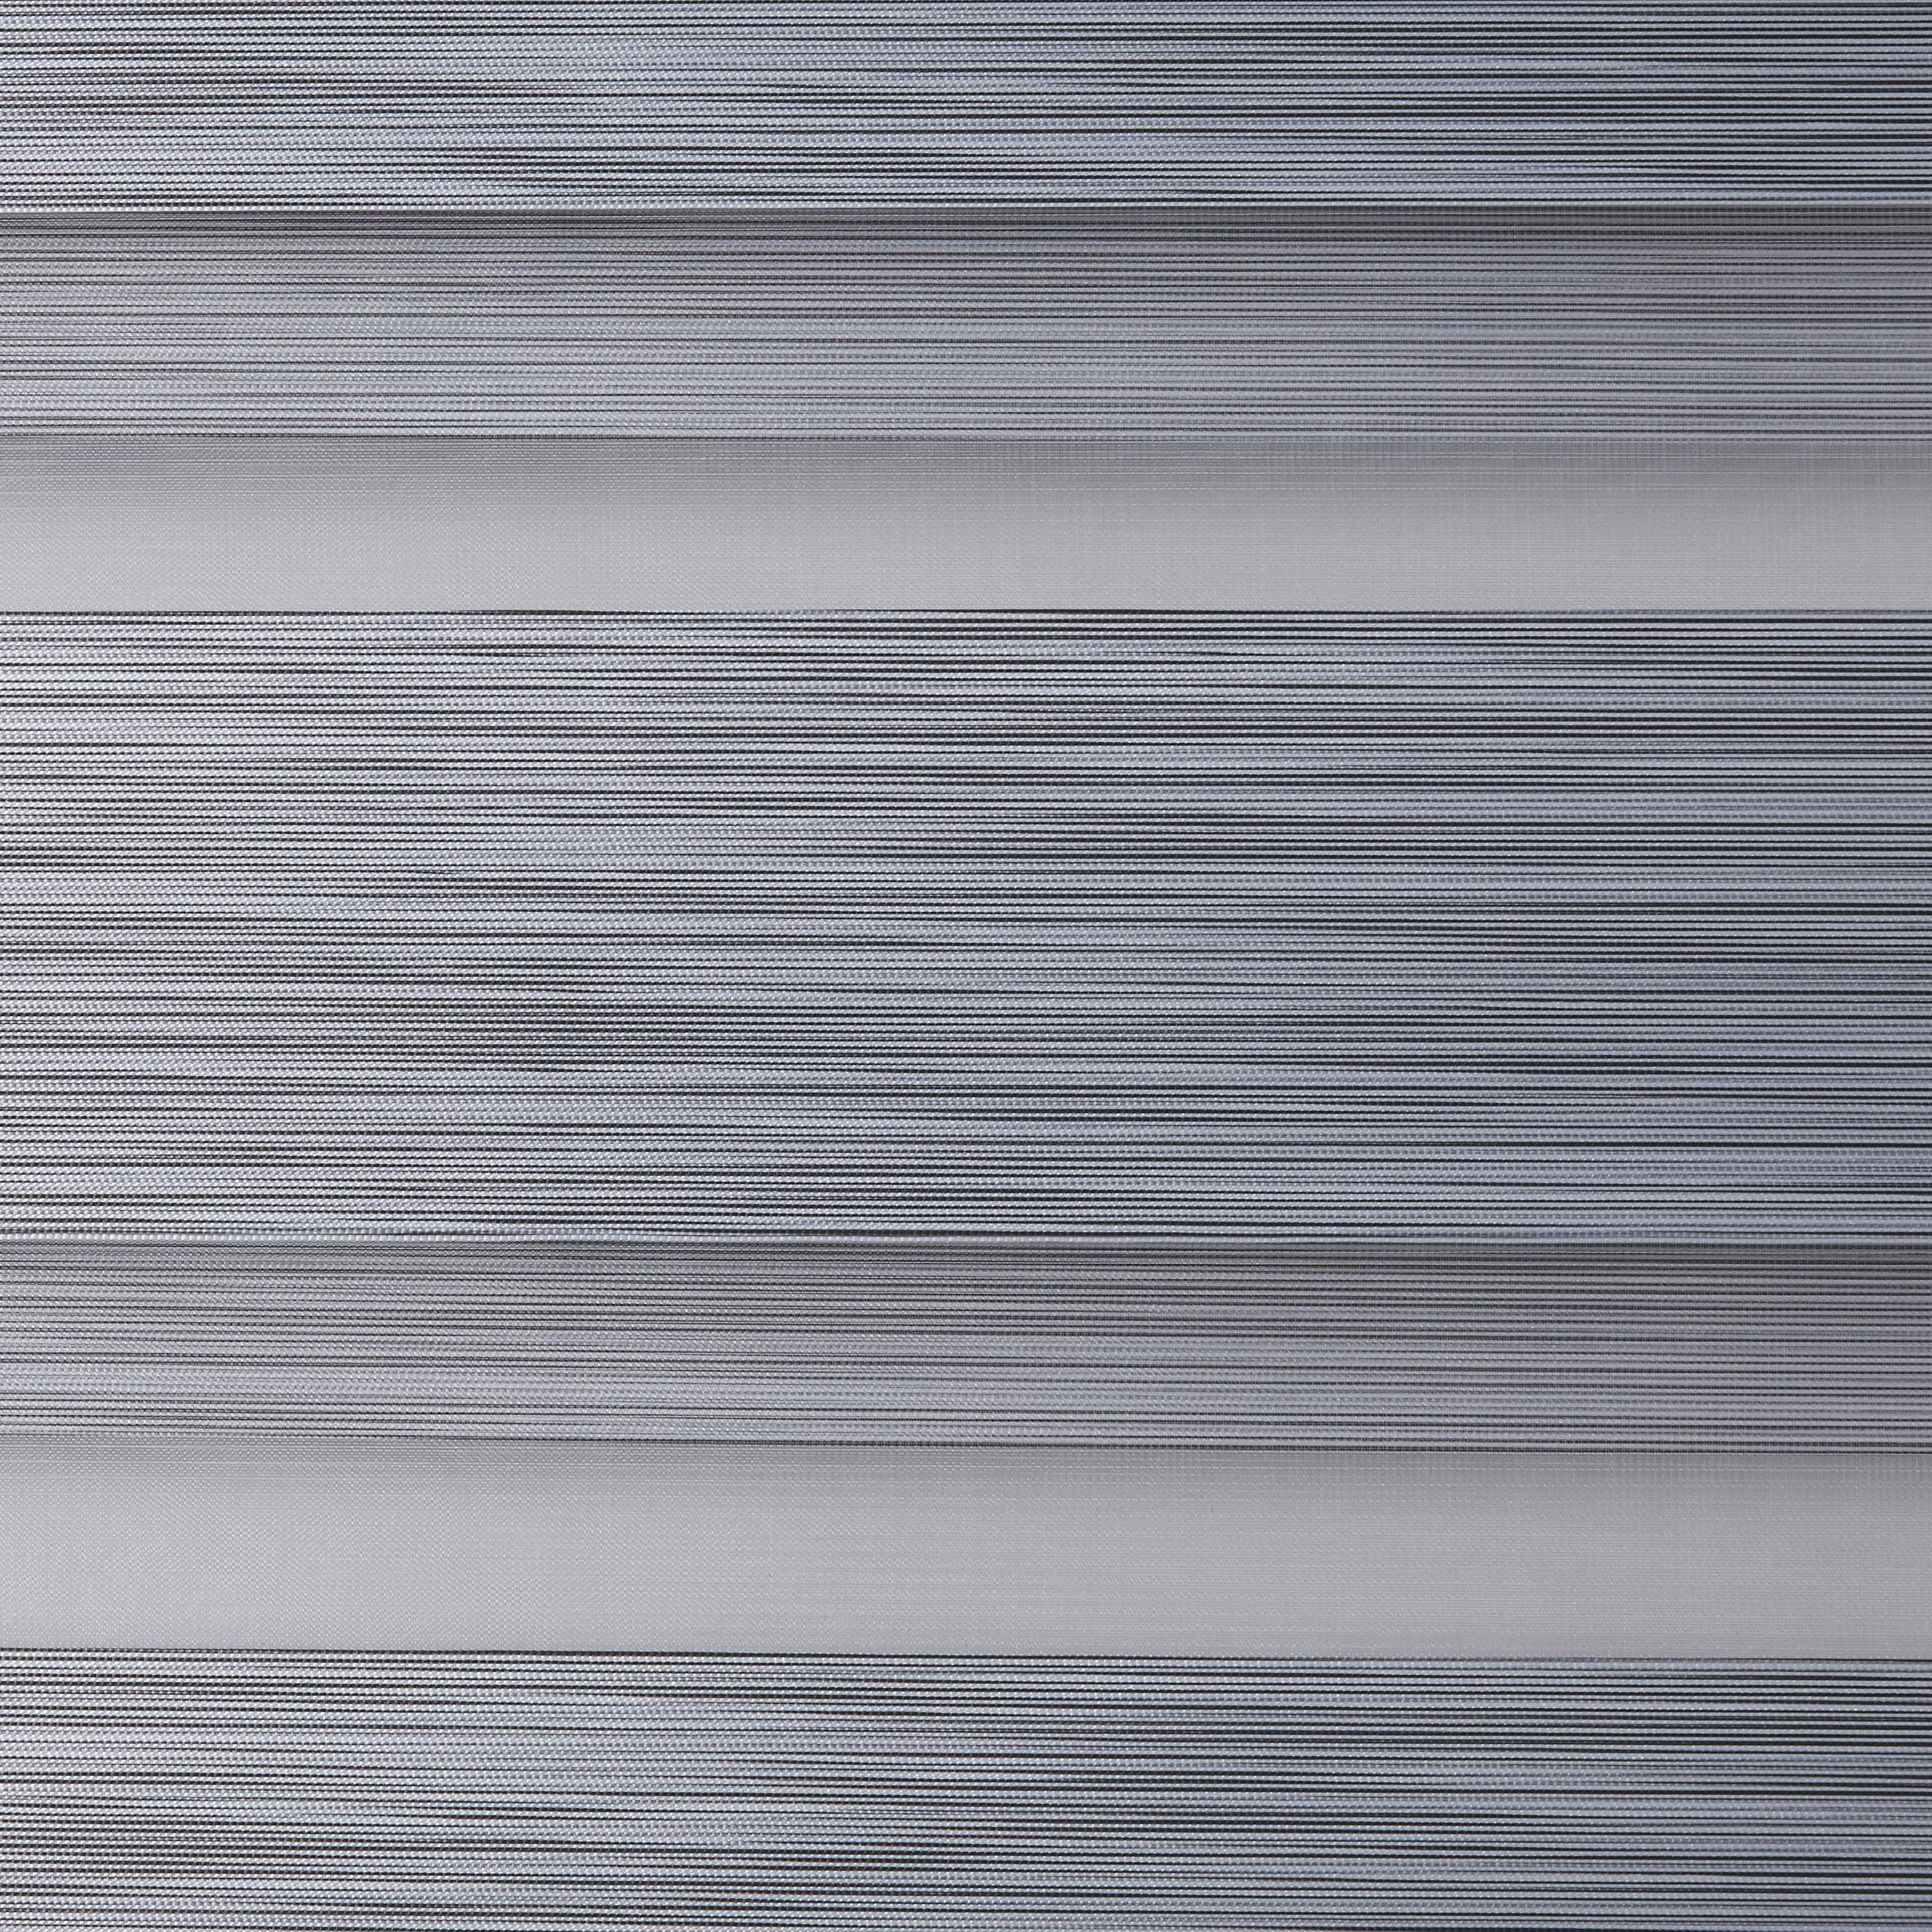 Kala Corded Grey Striped Day & night Roller Blind (W)180cm (L)240cm